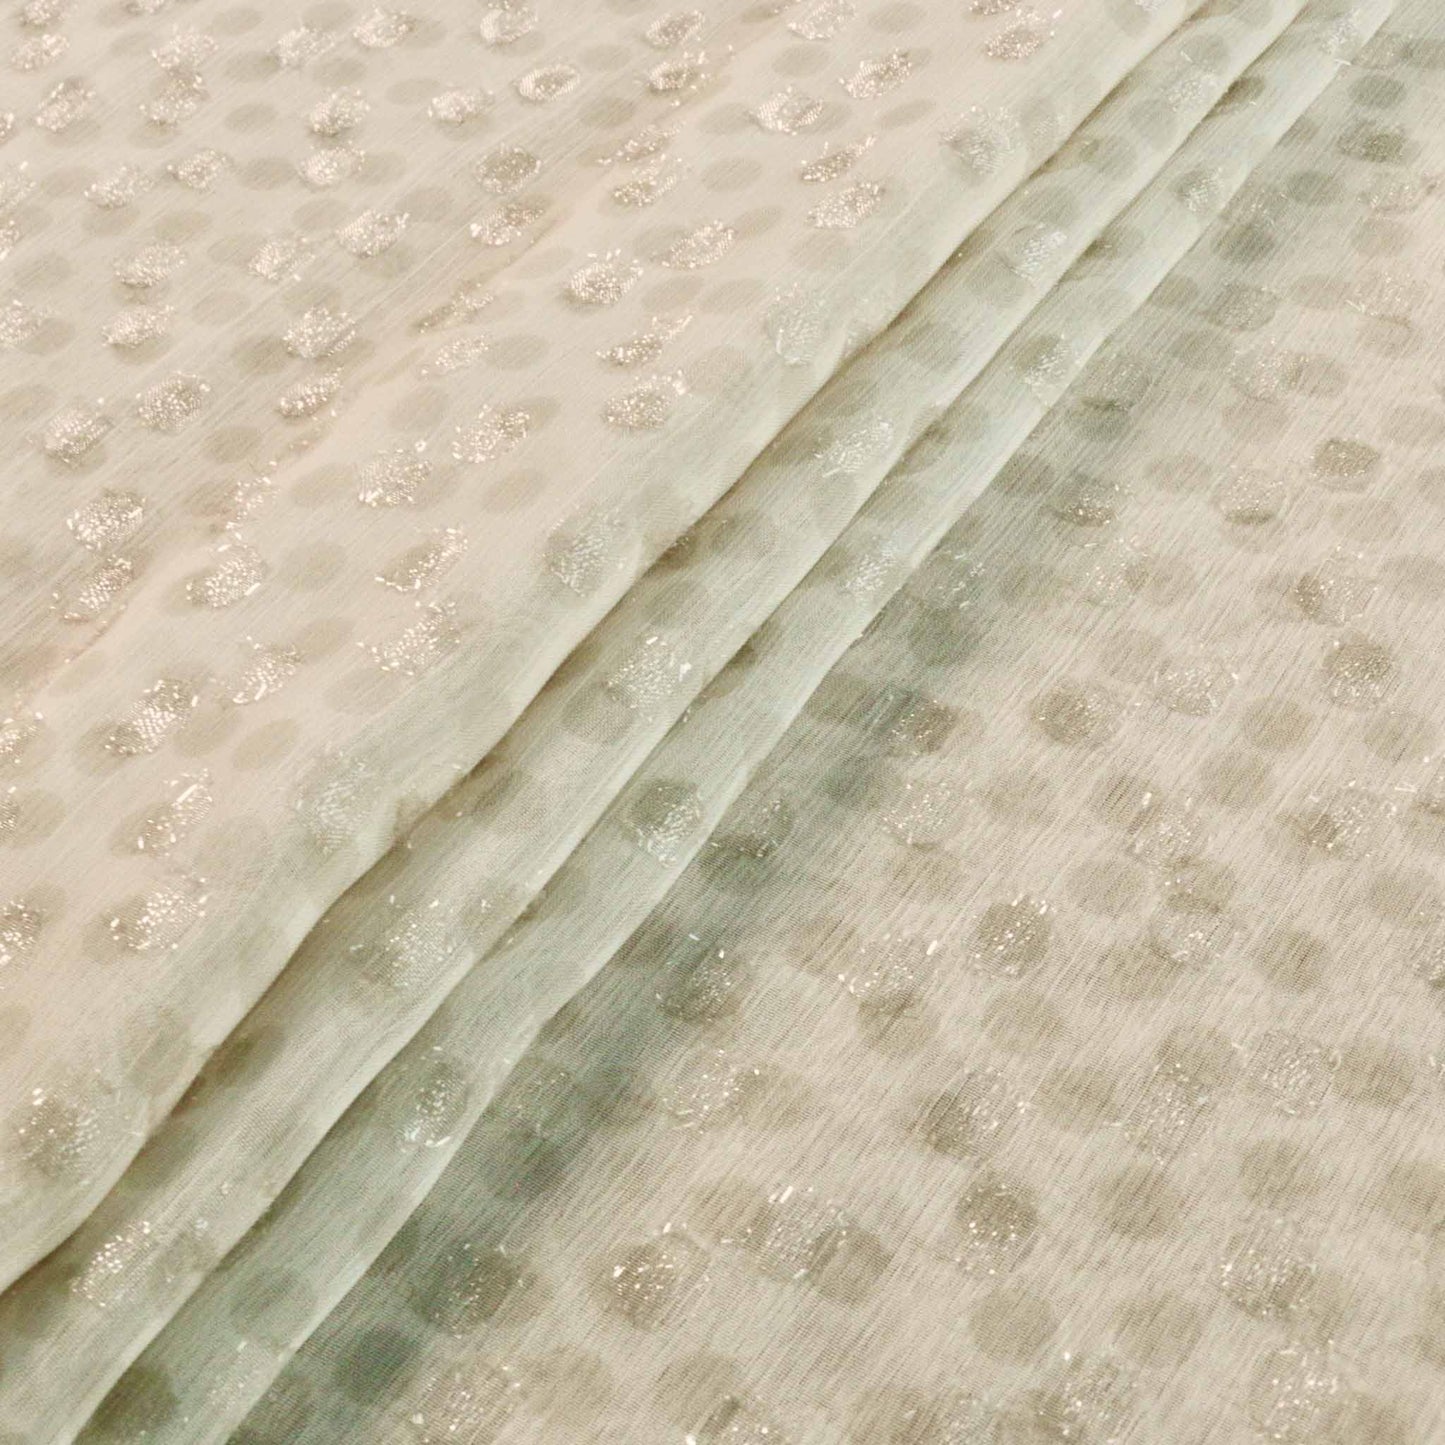 polka dot flocked chiffon dressmaking fabric with shimmer texture